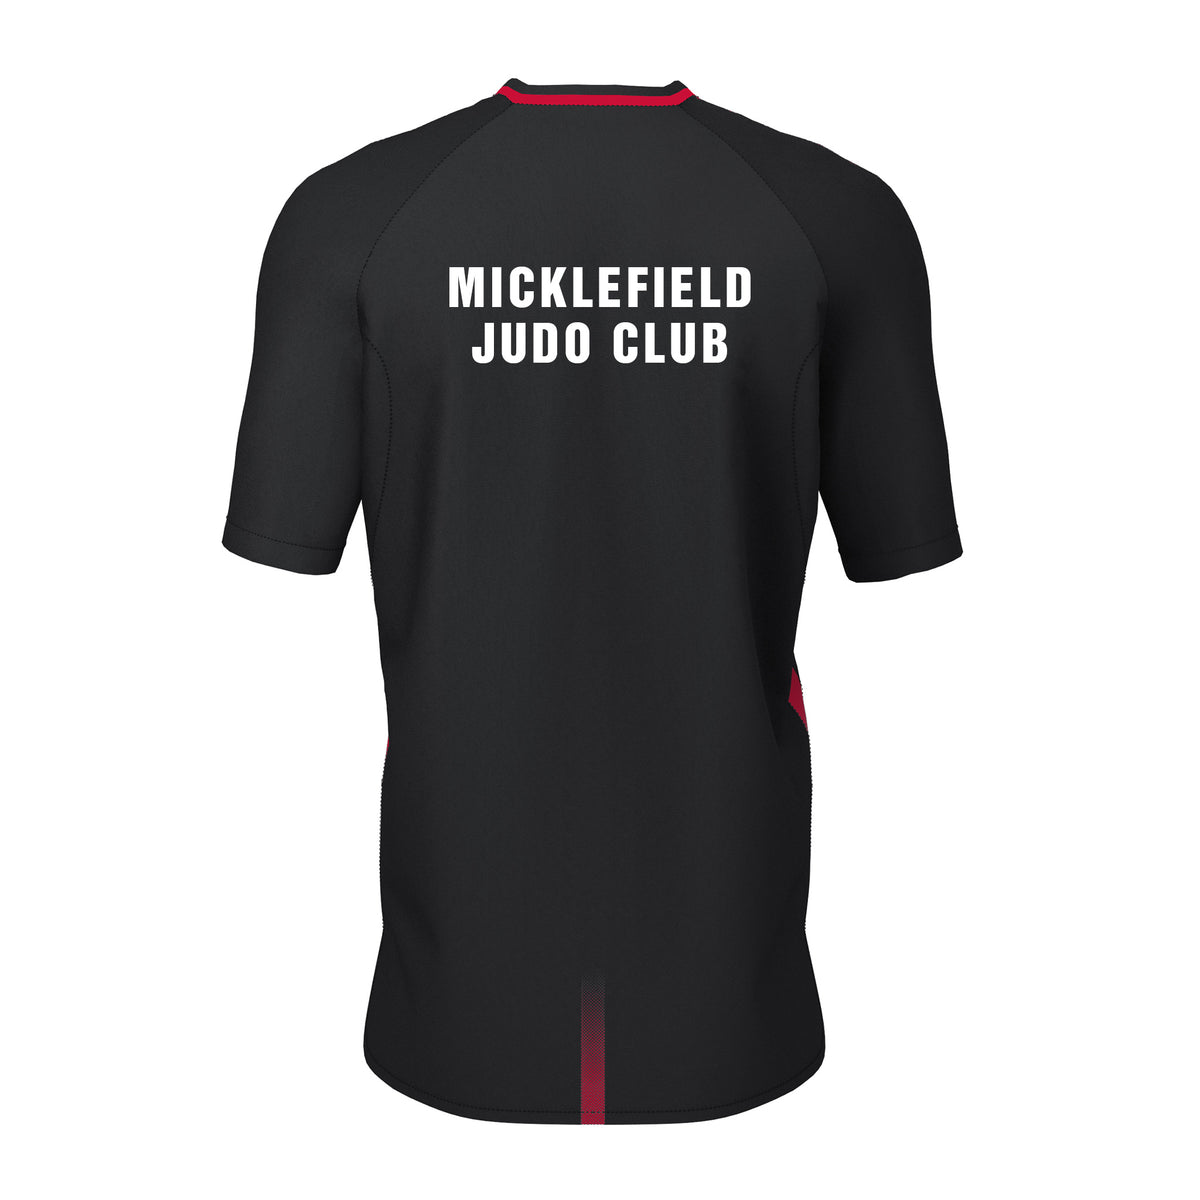 Micklefield Judo Club Senior Training Shirt